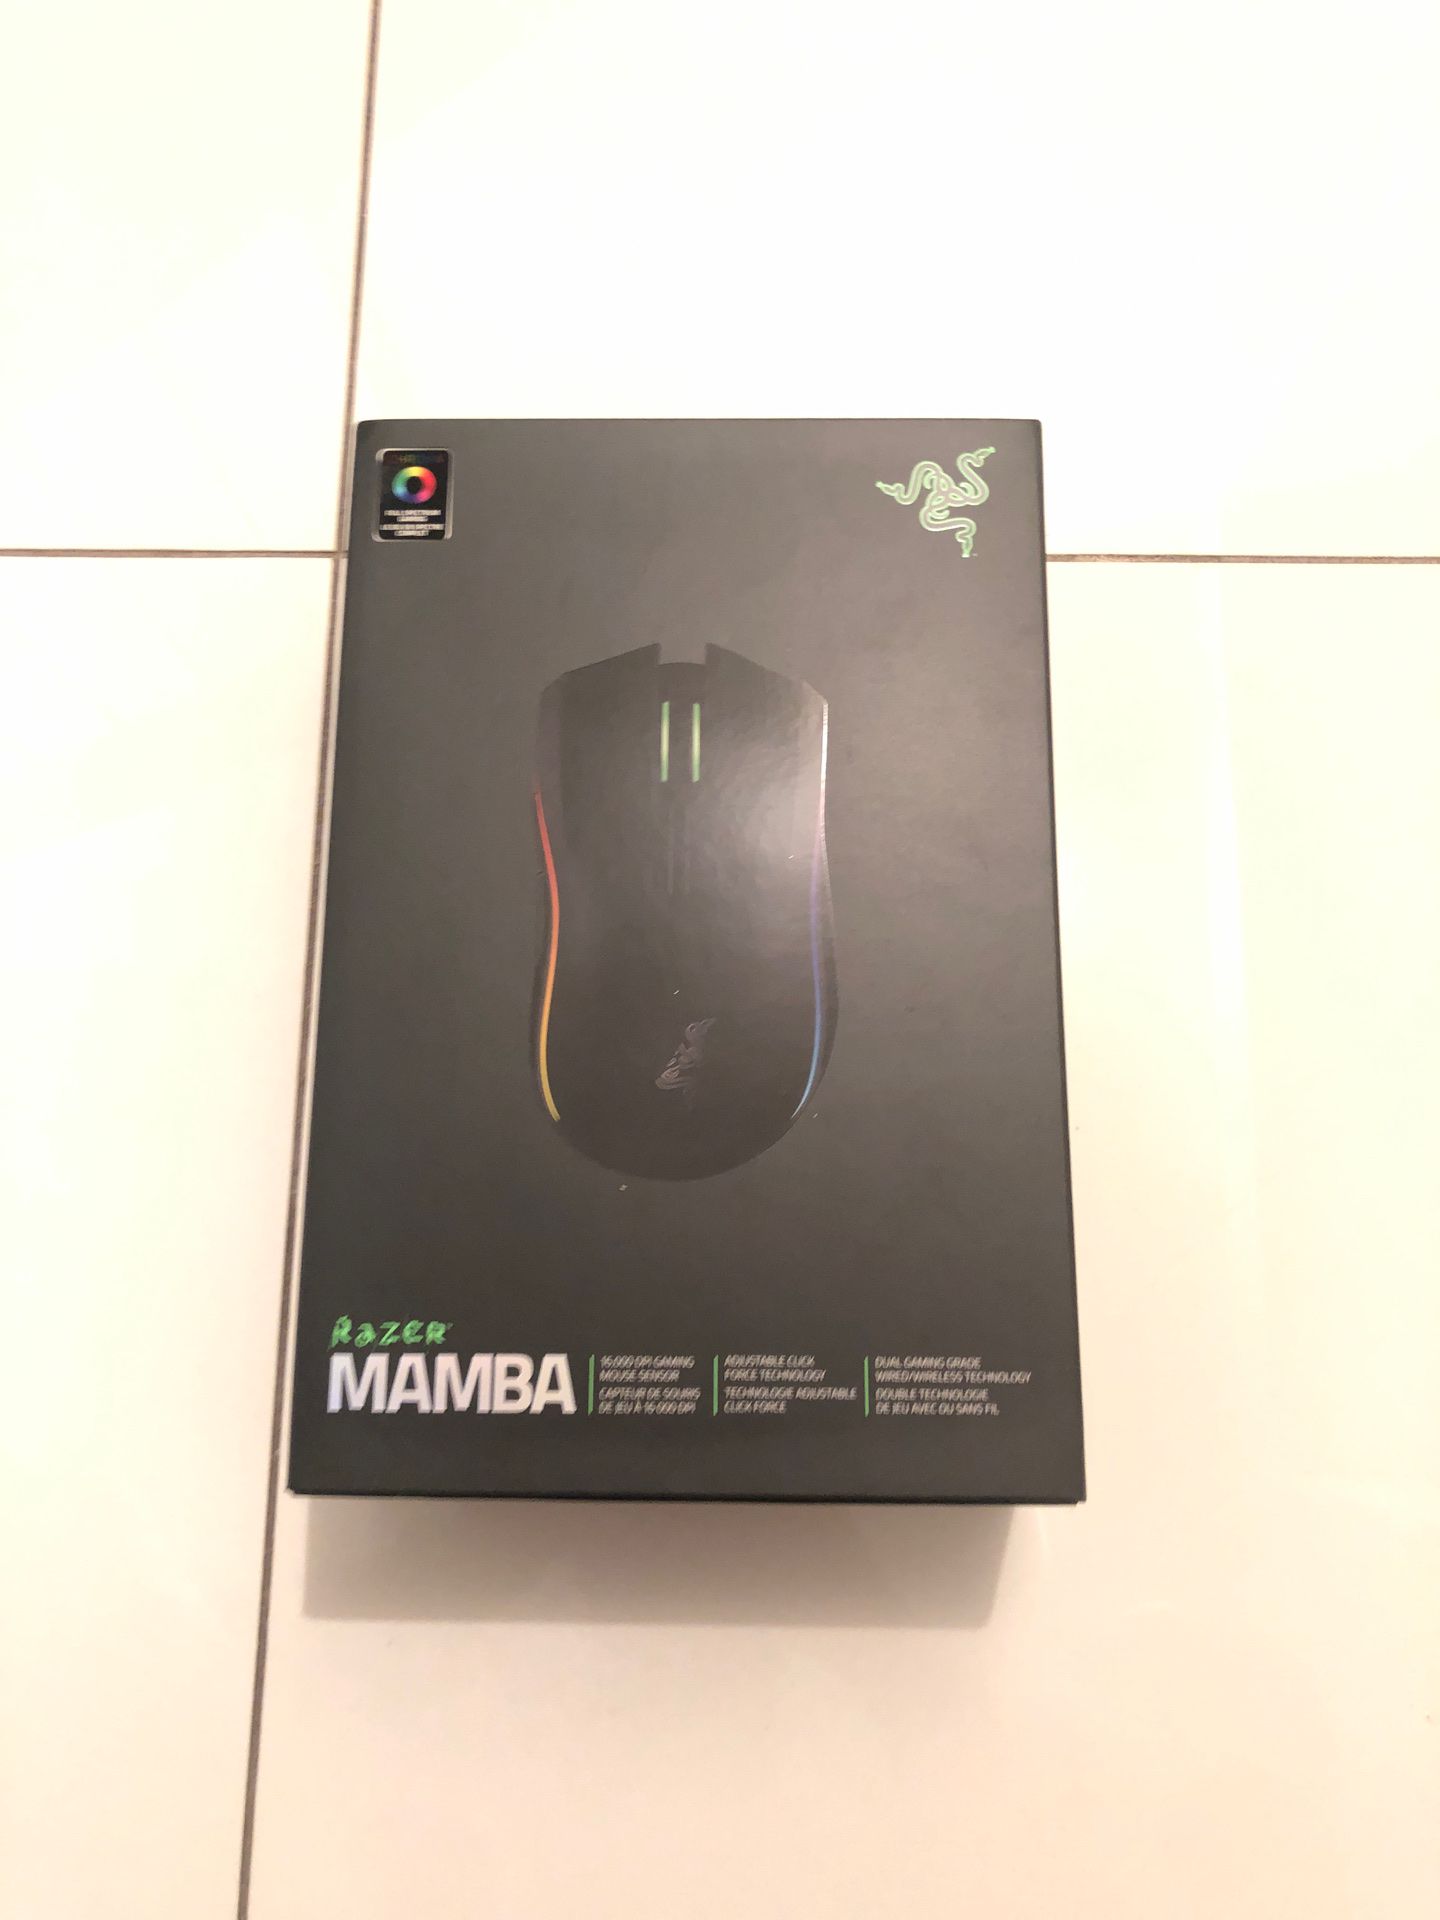 Razer Mamba Chroma - Professional Grade Esports Wired/Wireless Ergonomic Gaming Mouse - 16,000 DPI Sensor